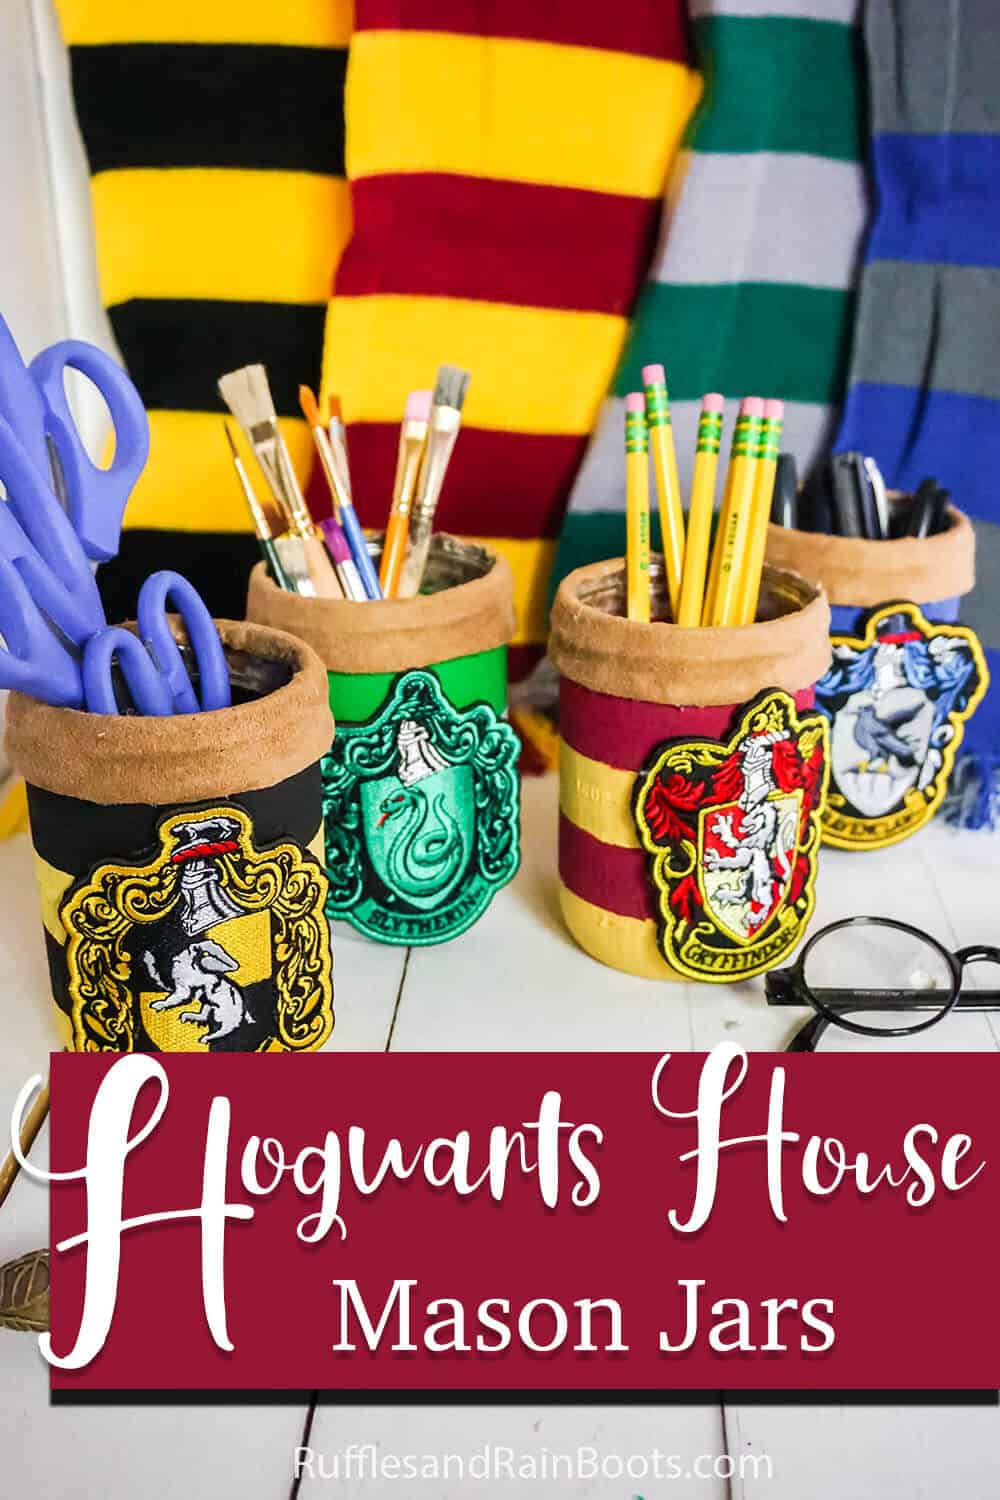 easy diy harry potter themed mason jar craft idea with text which reads hogwarts house mason jars